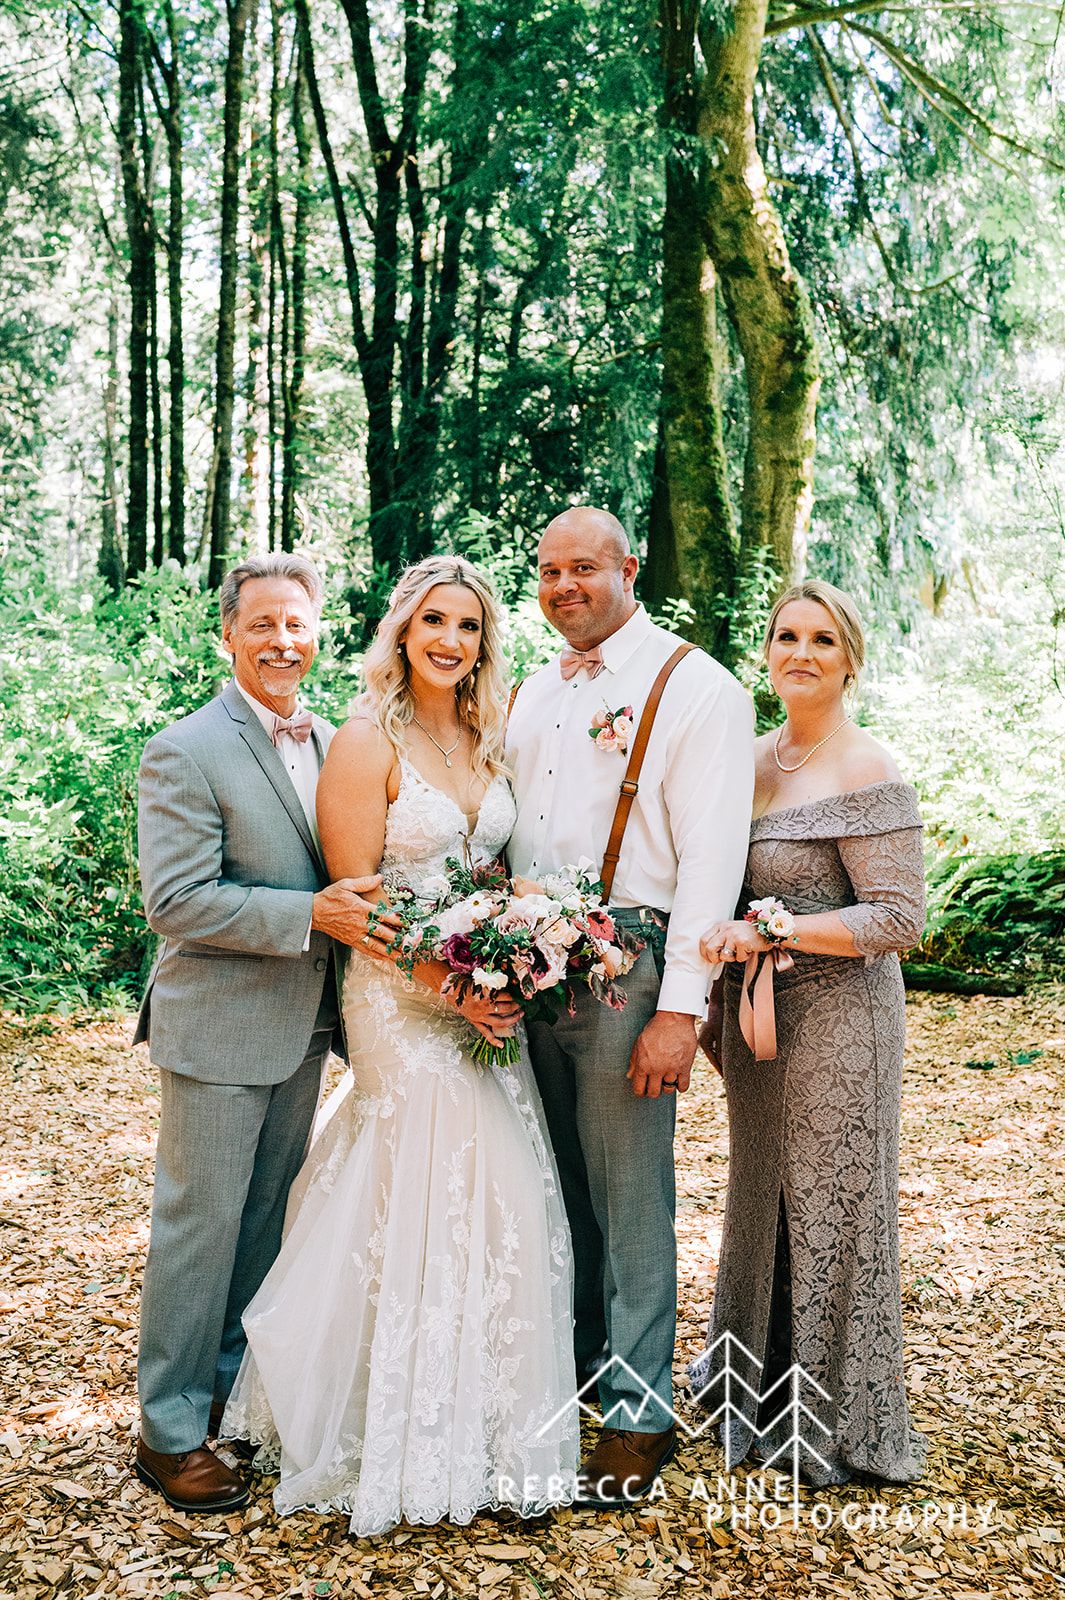 Rebecca Anne Photography Blog Seattle Wedding Photographer